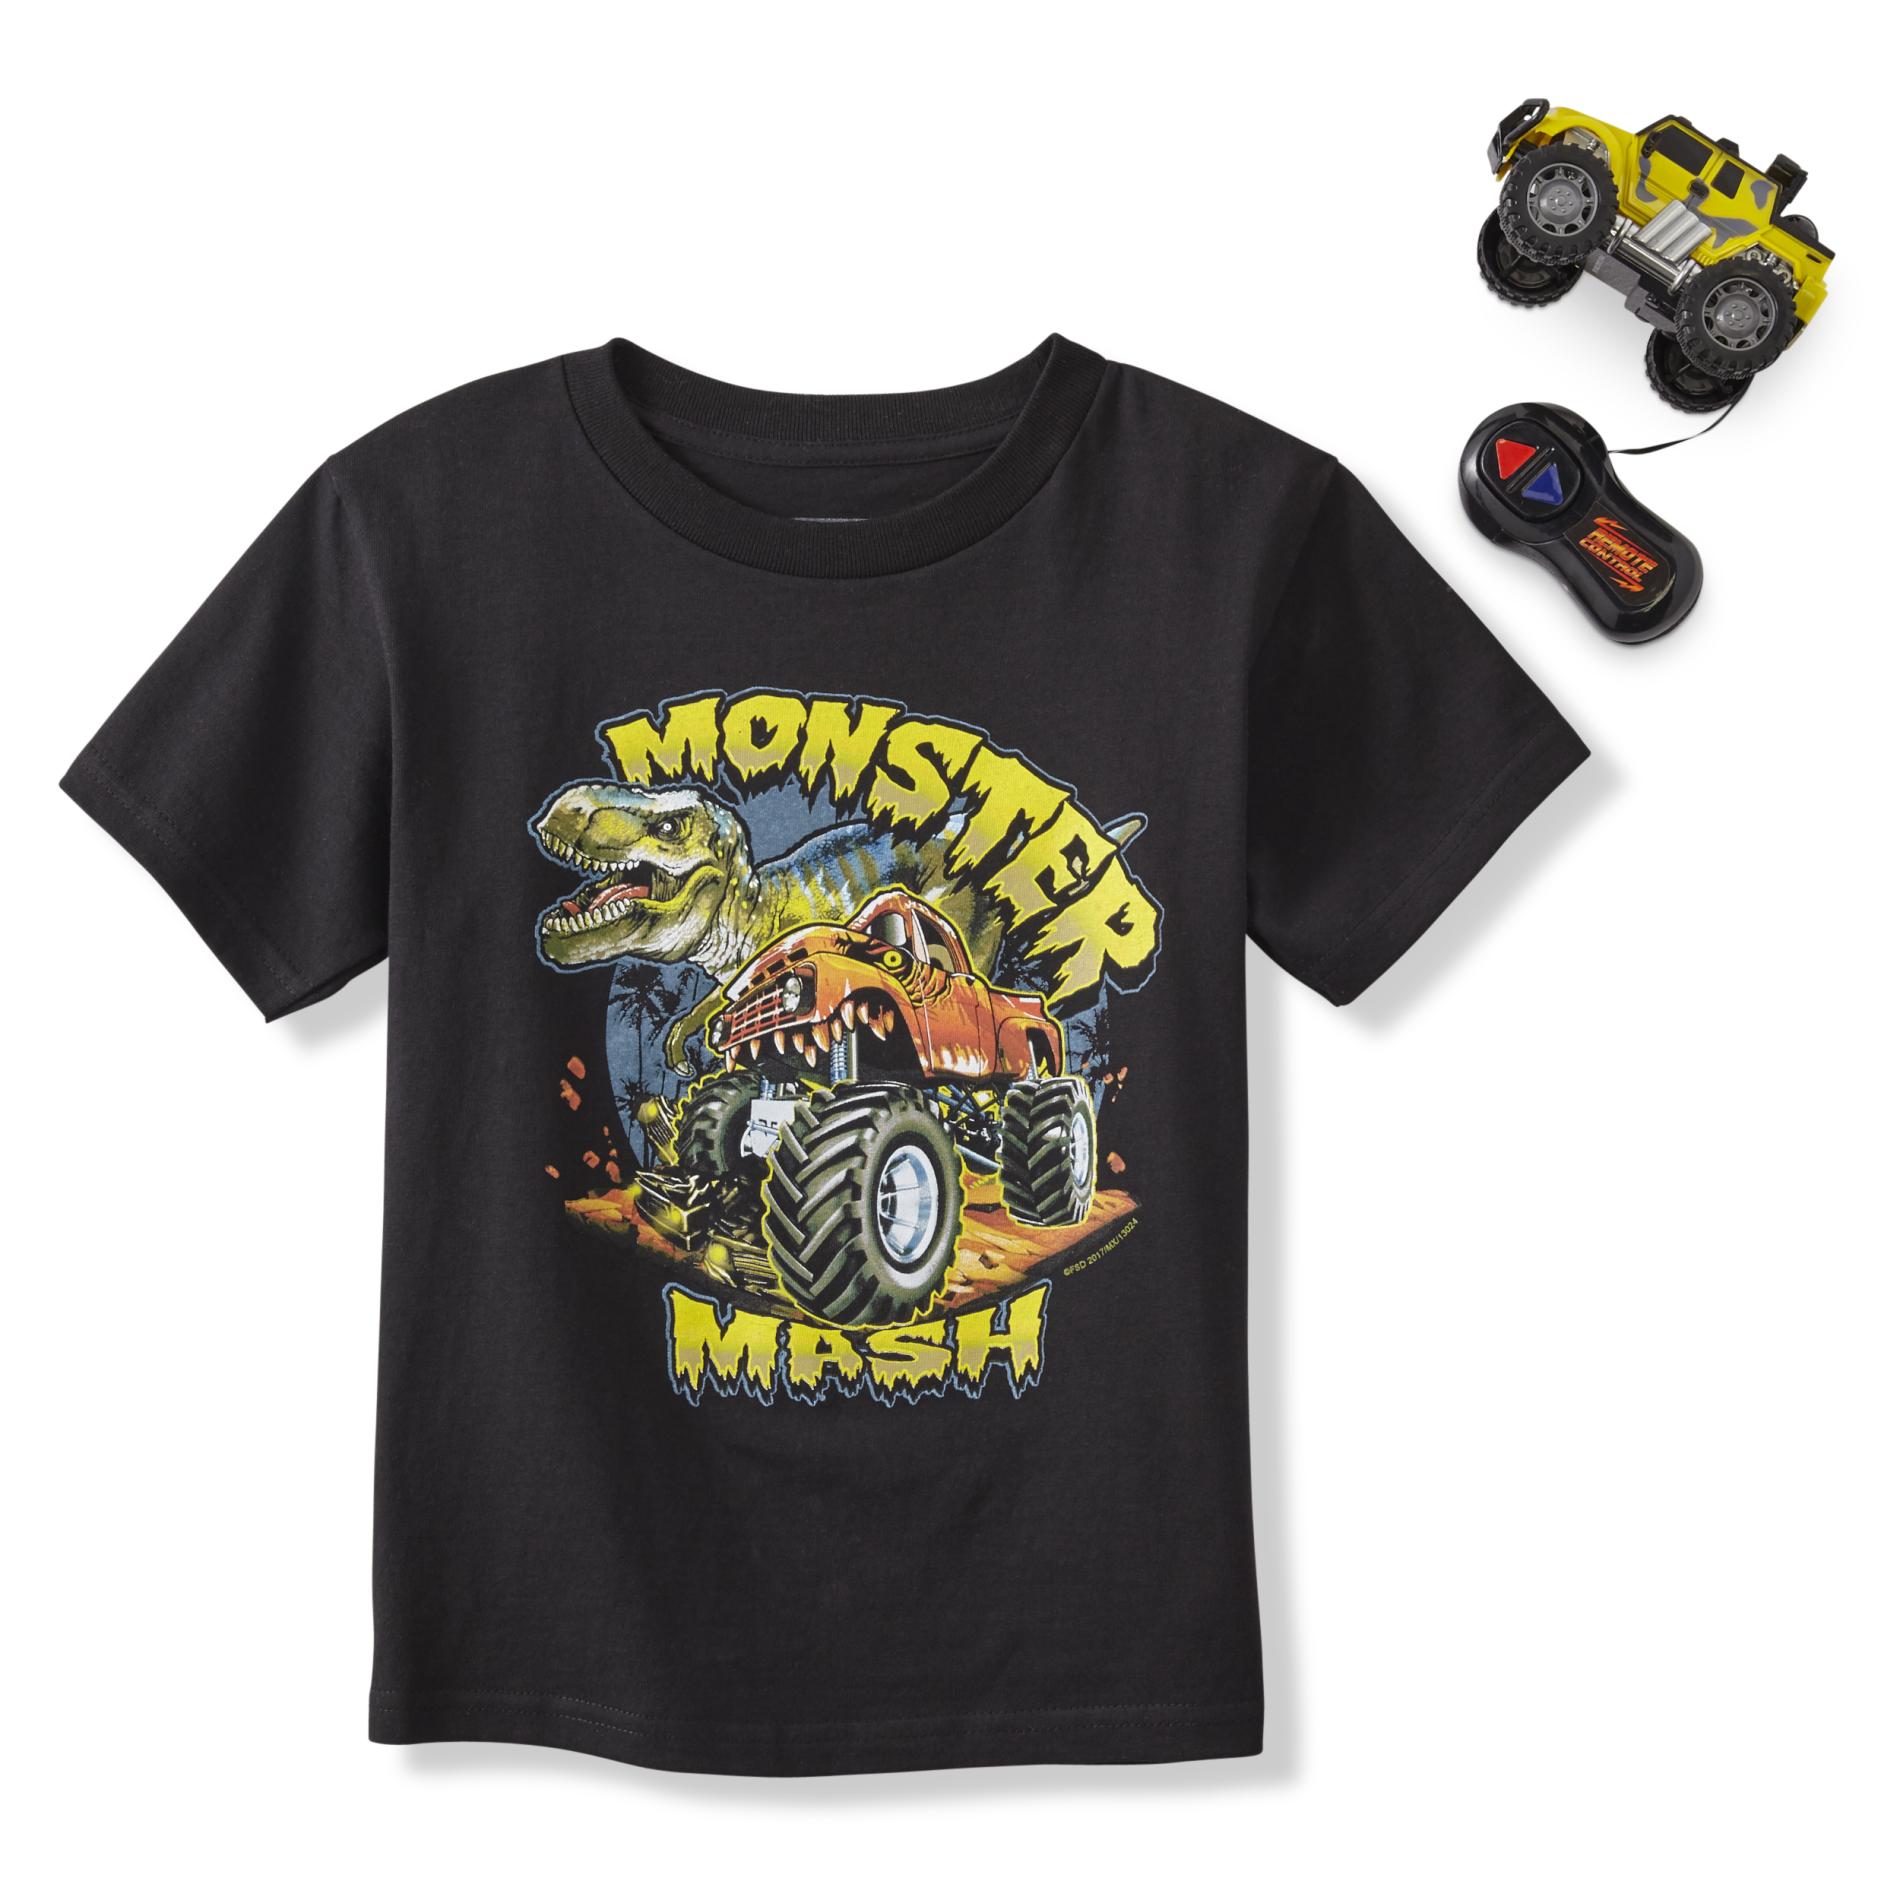 Rudeboyz Boys' Graphic T-Shirt & Remote Control Truck - Monster Mash